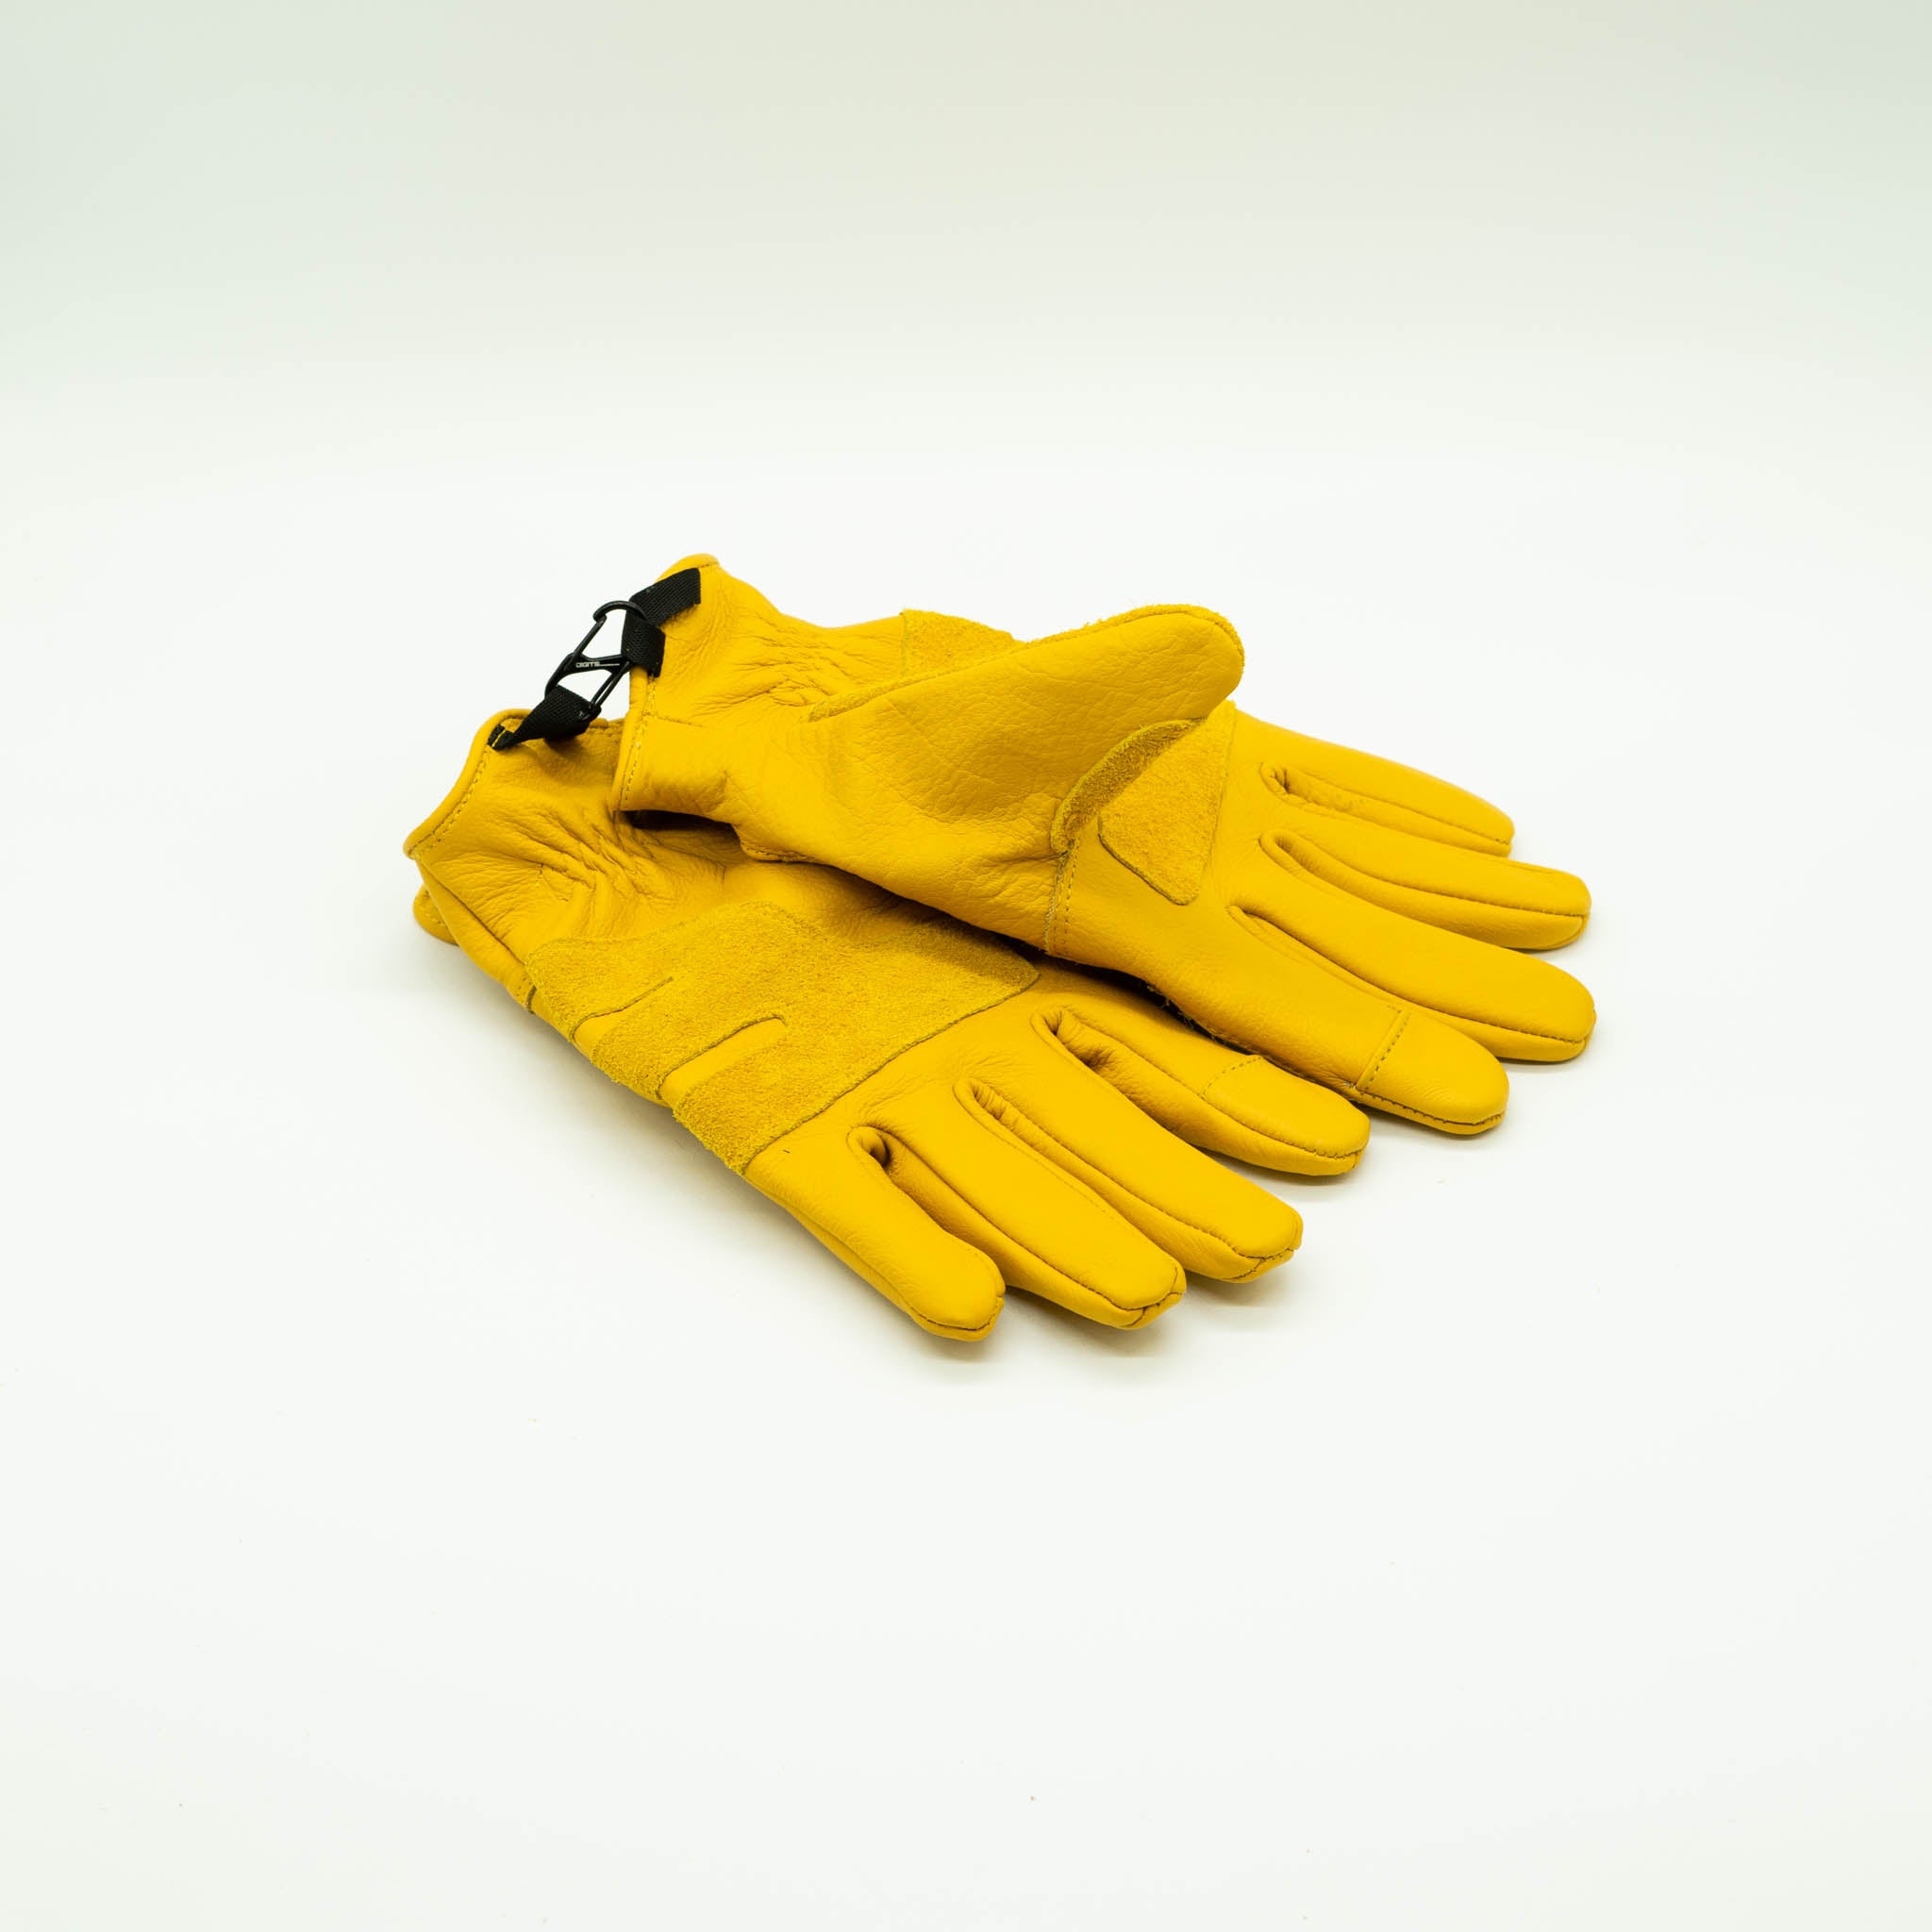 Mechanix Wear - Which Glove Works Best for Your Job? 